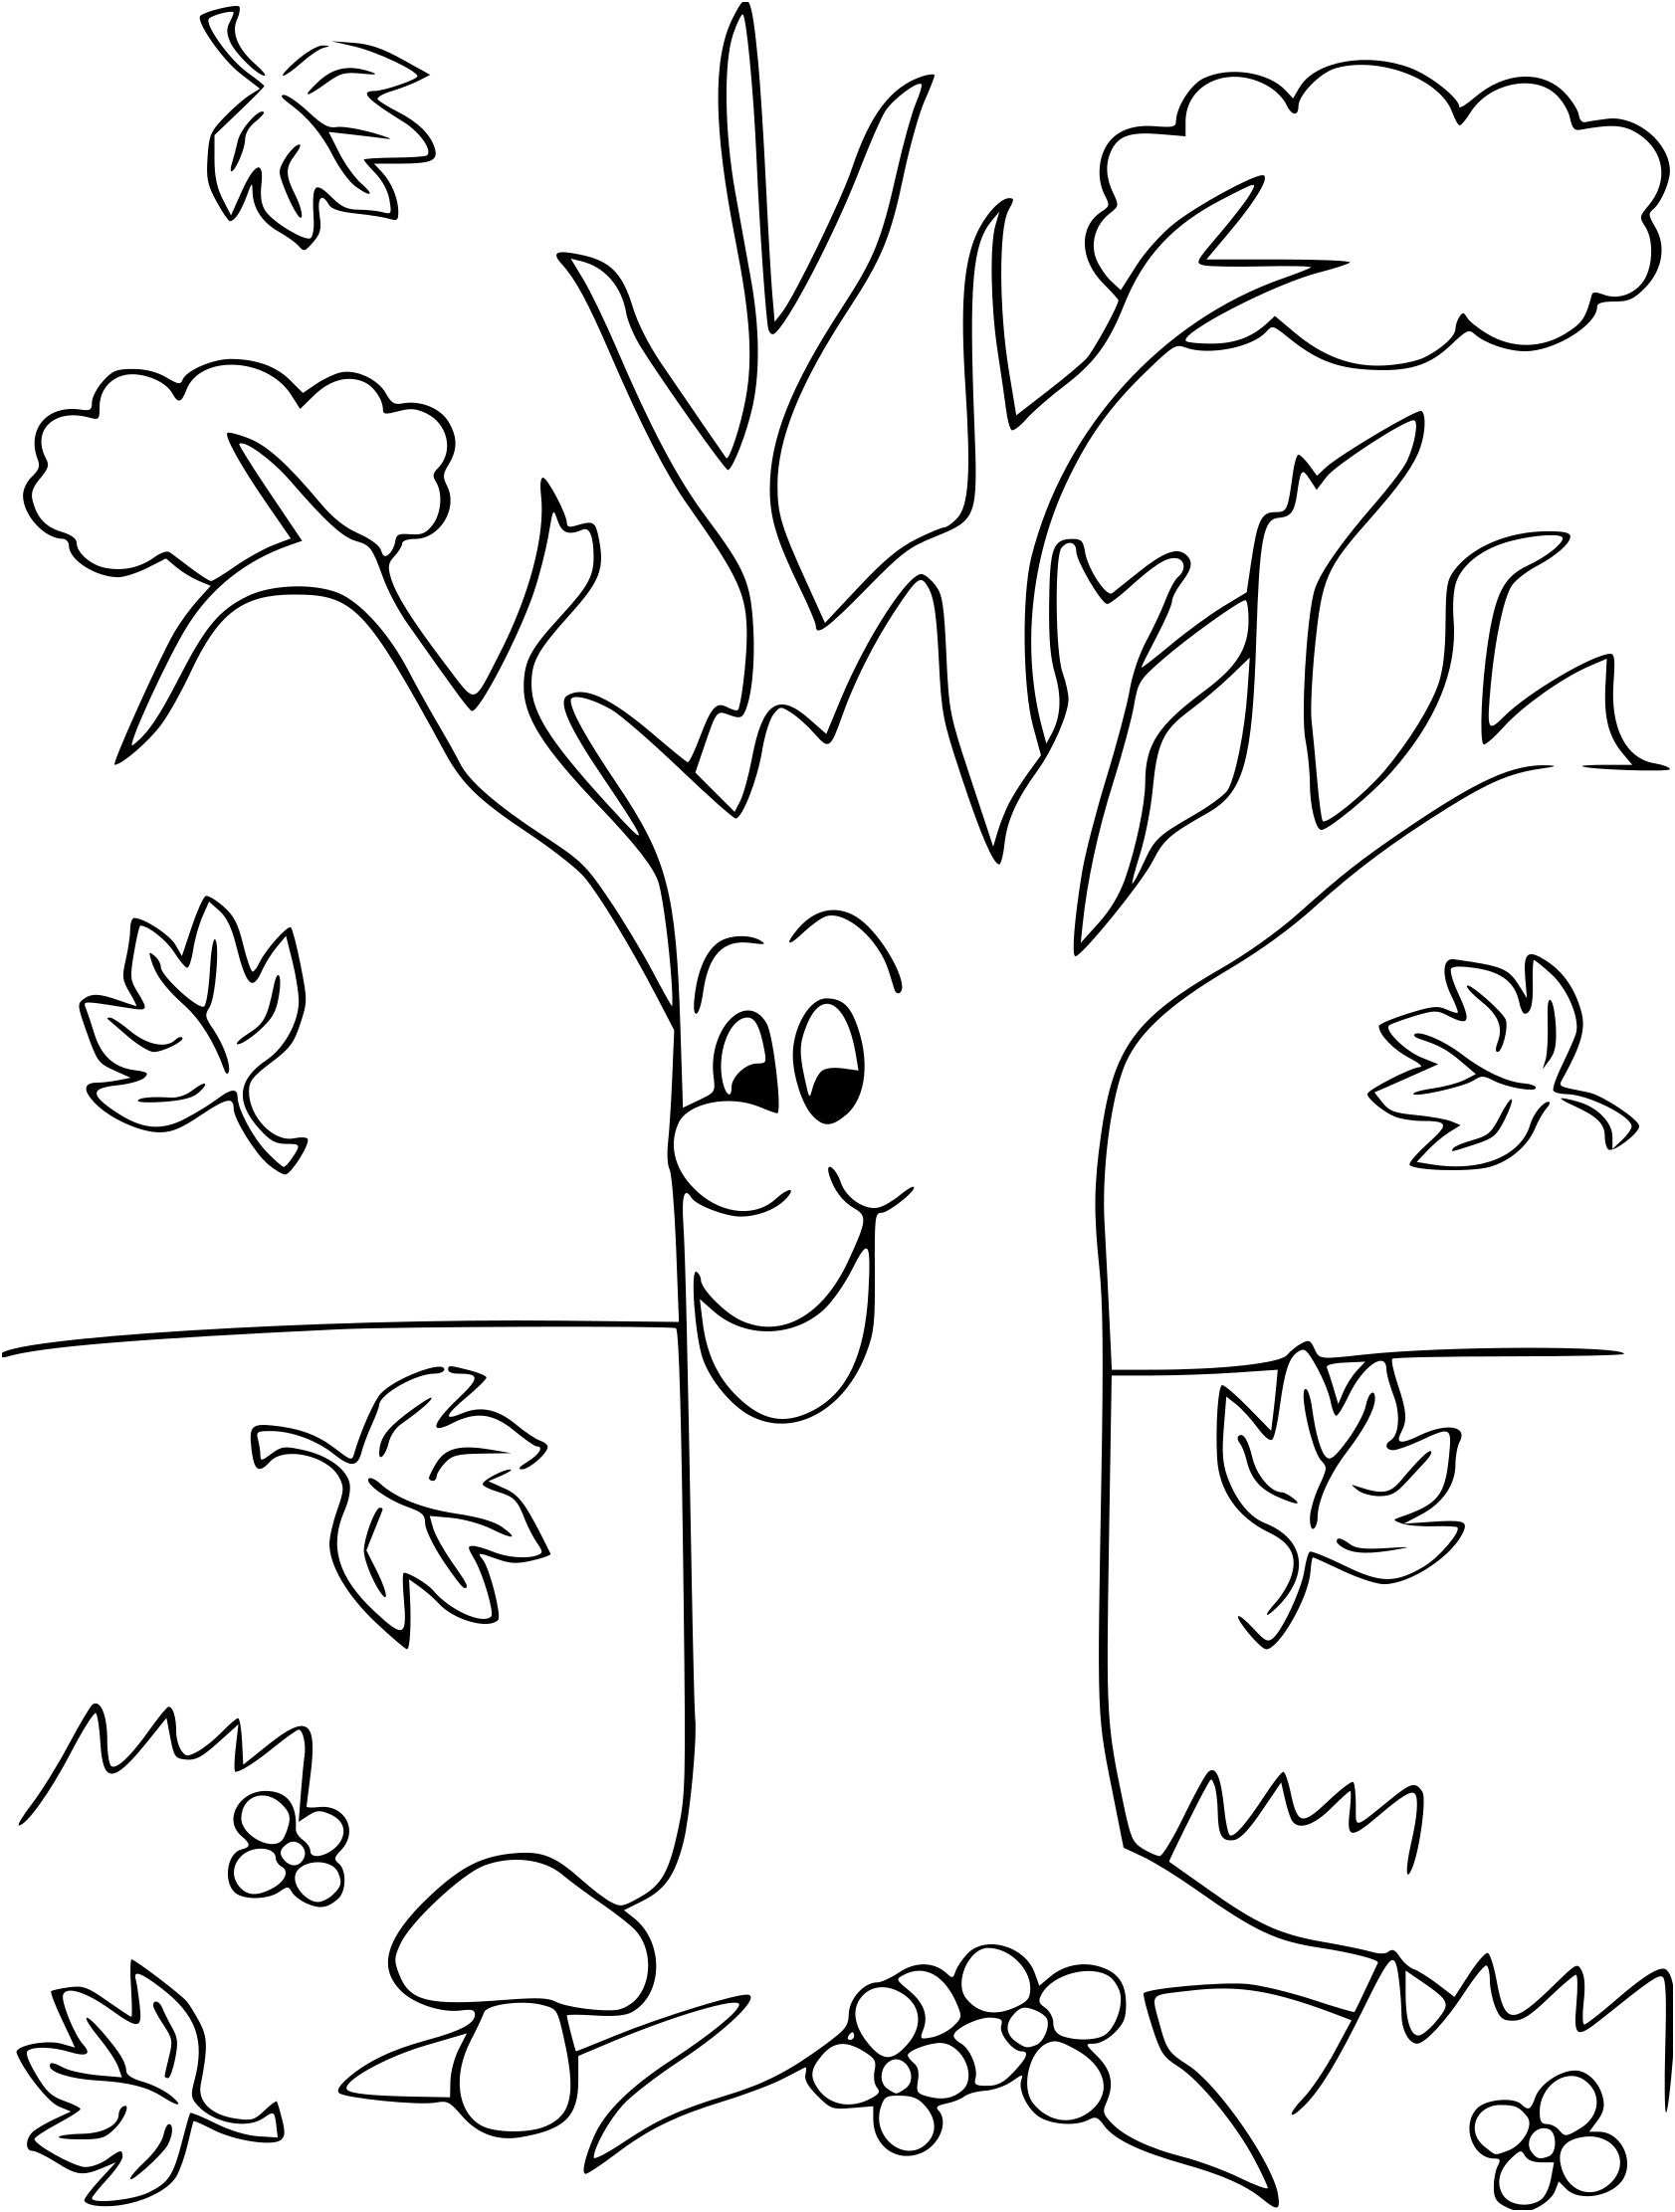 7922 coloriage automne maternelle dessin imprimer sur 7888 arbre automne maternelle coloriage dessin